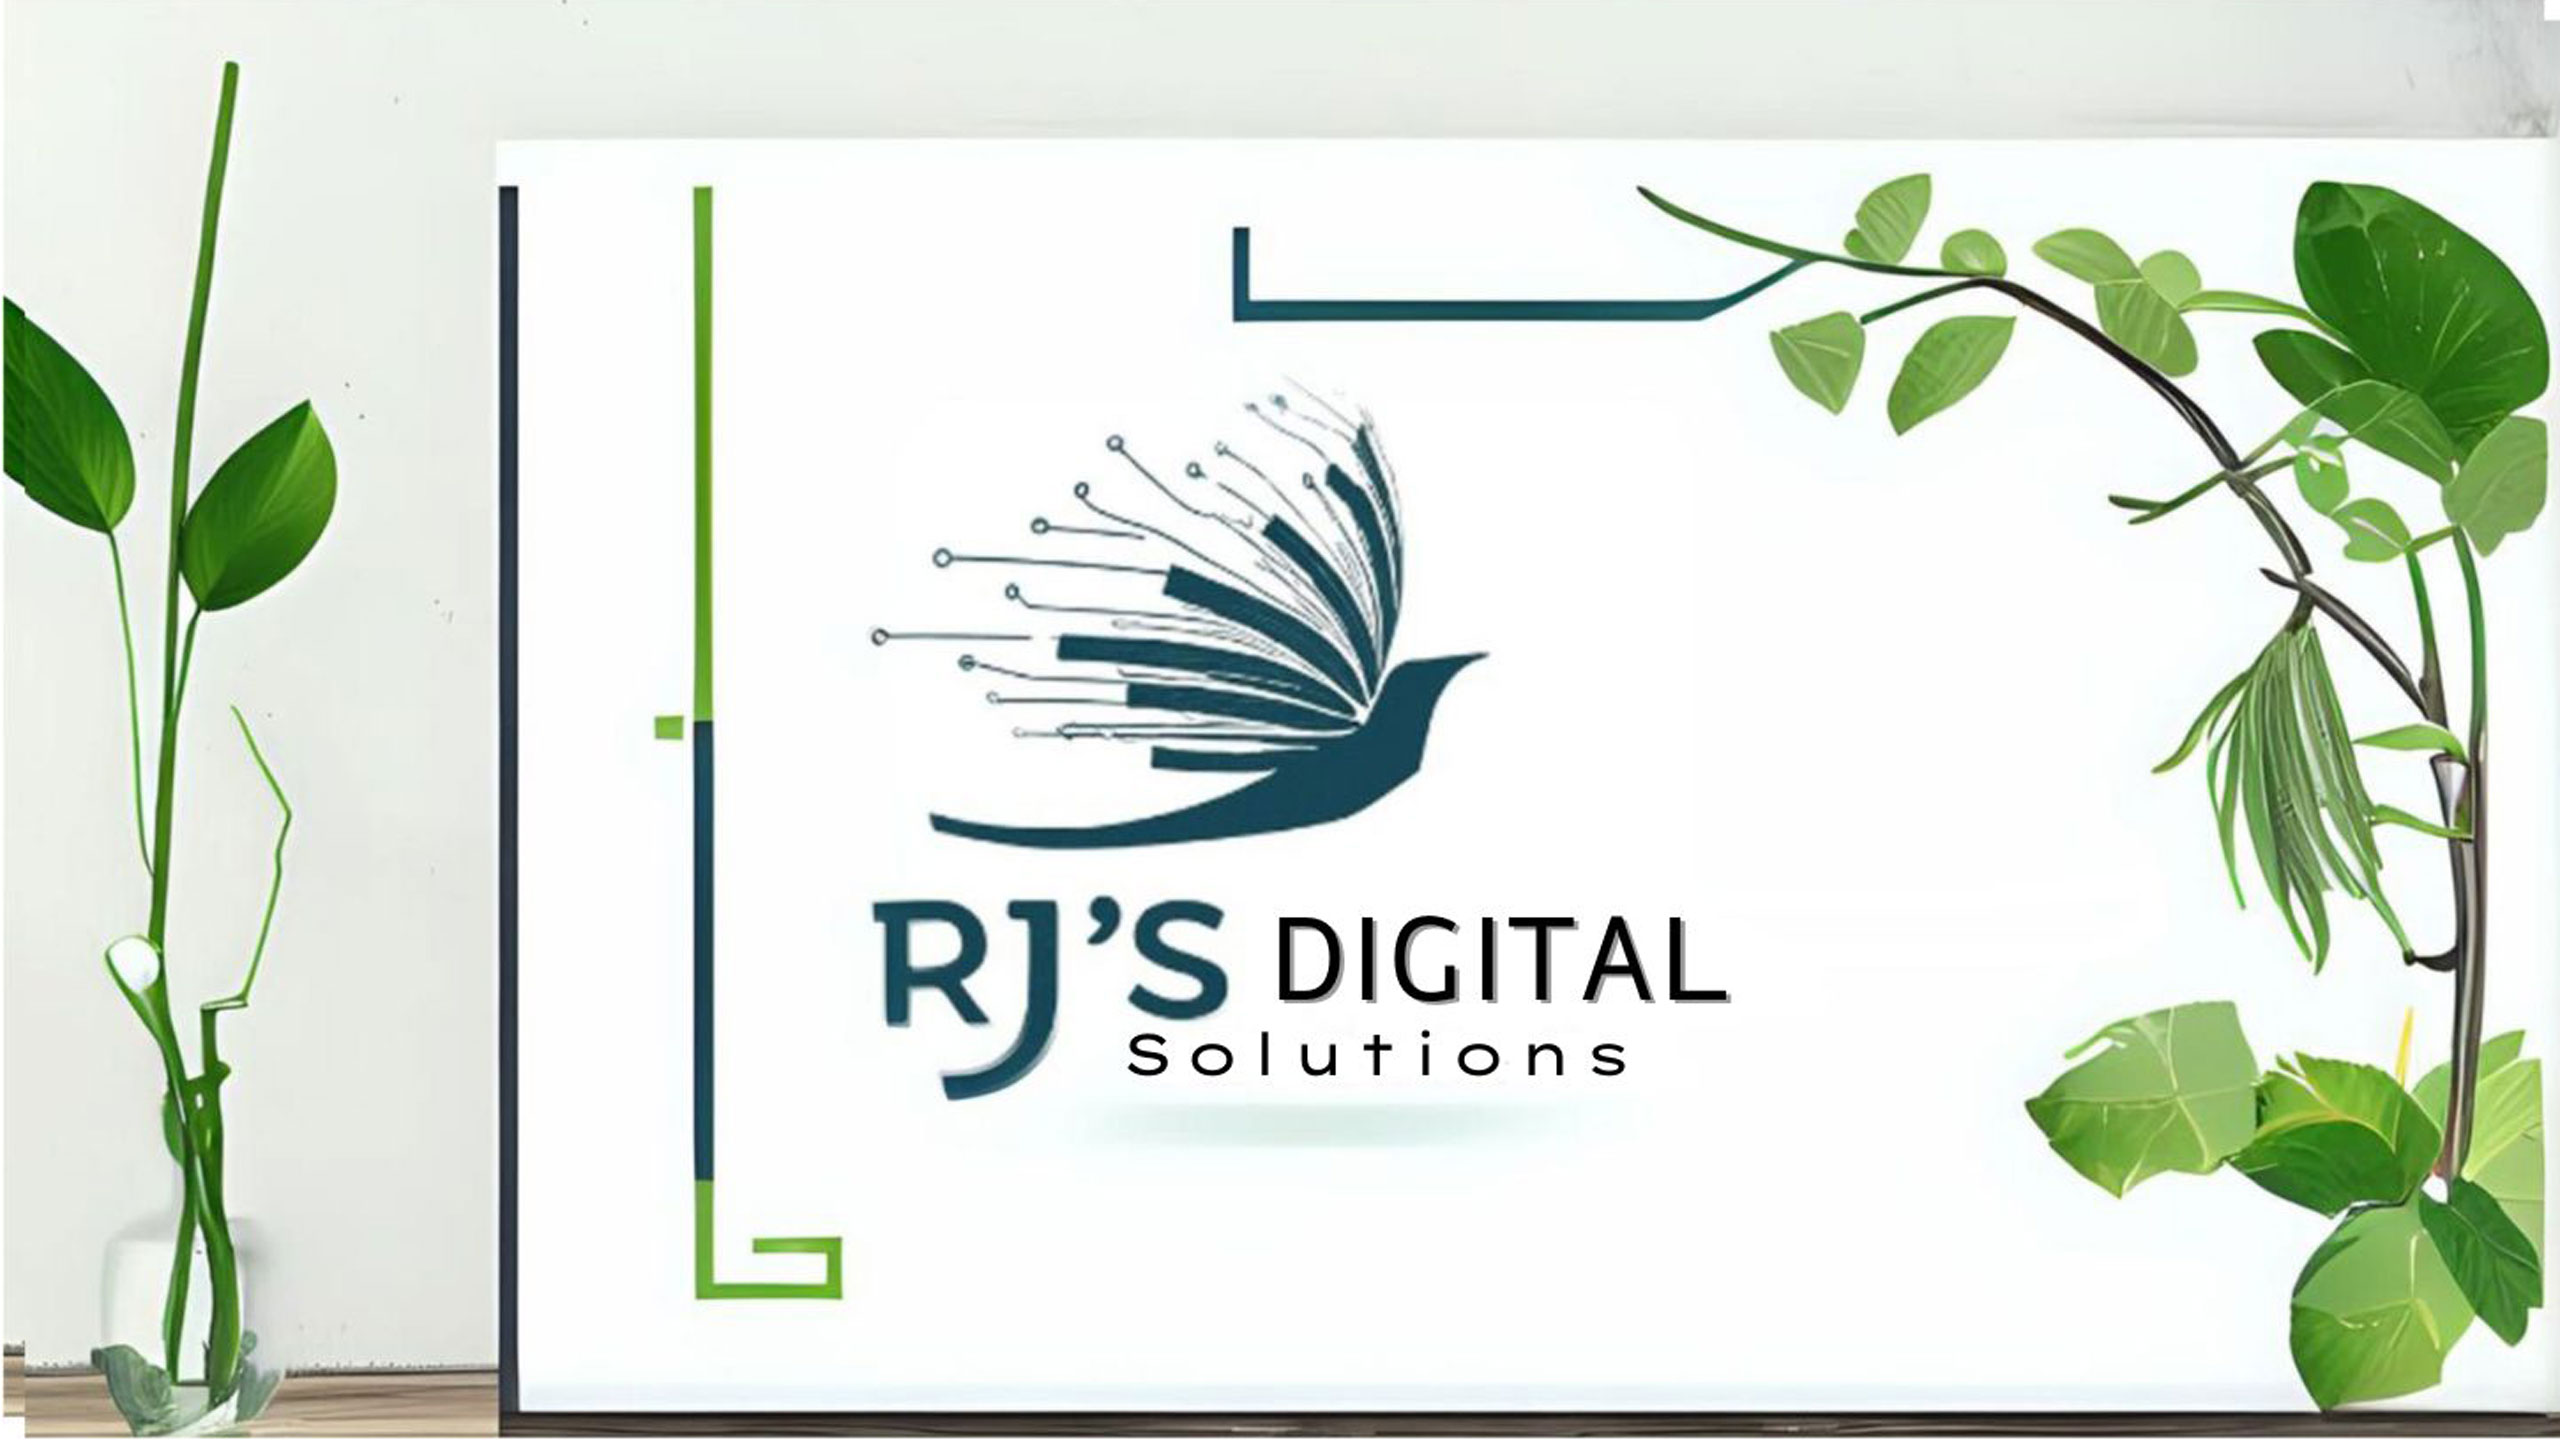 RJ's Digital Solutions, LLC